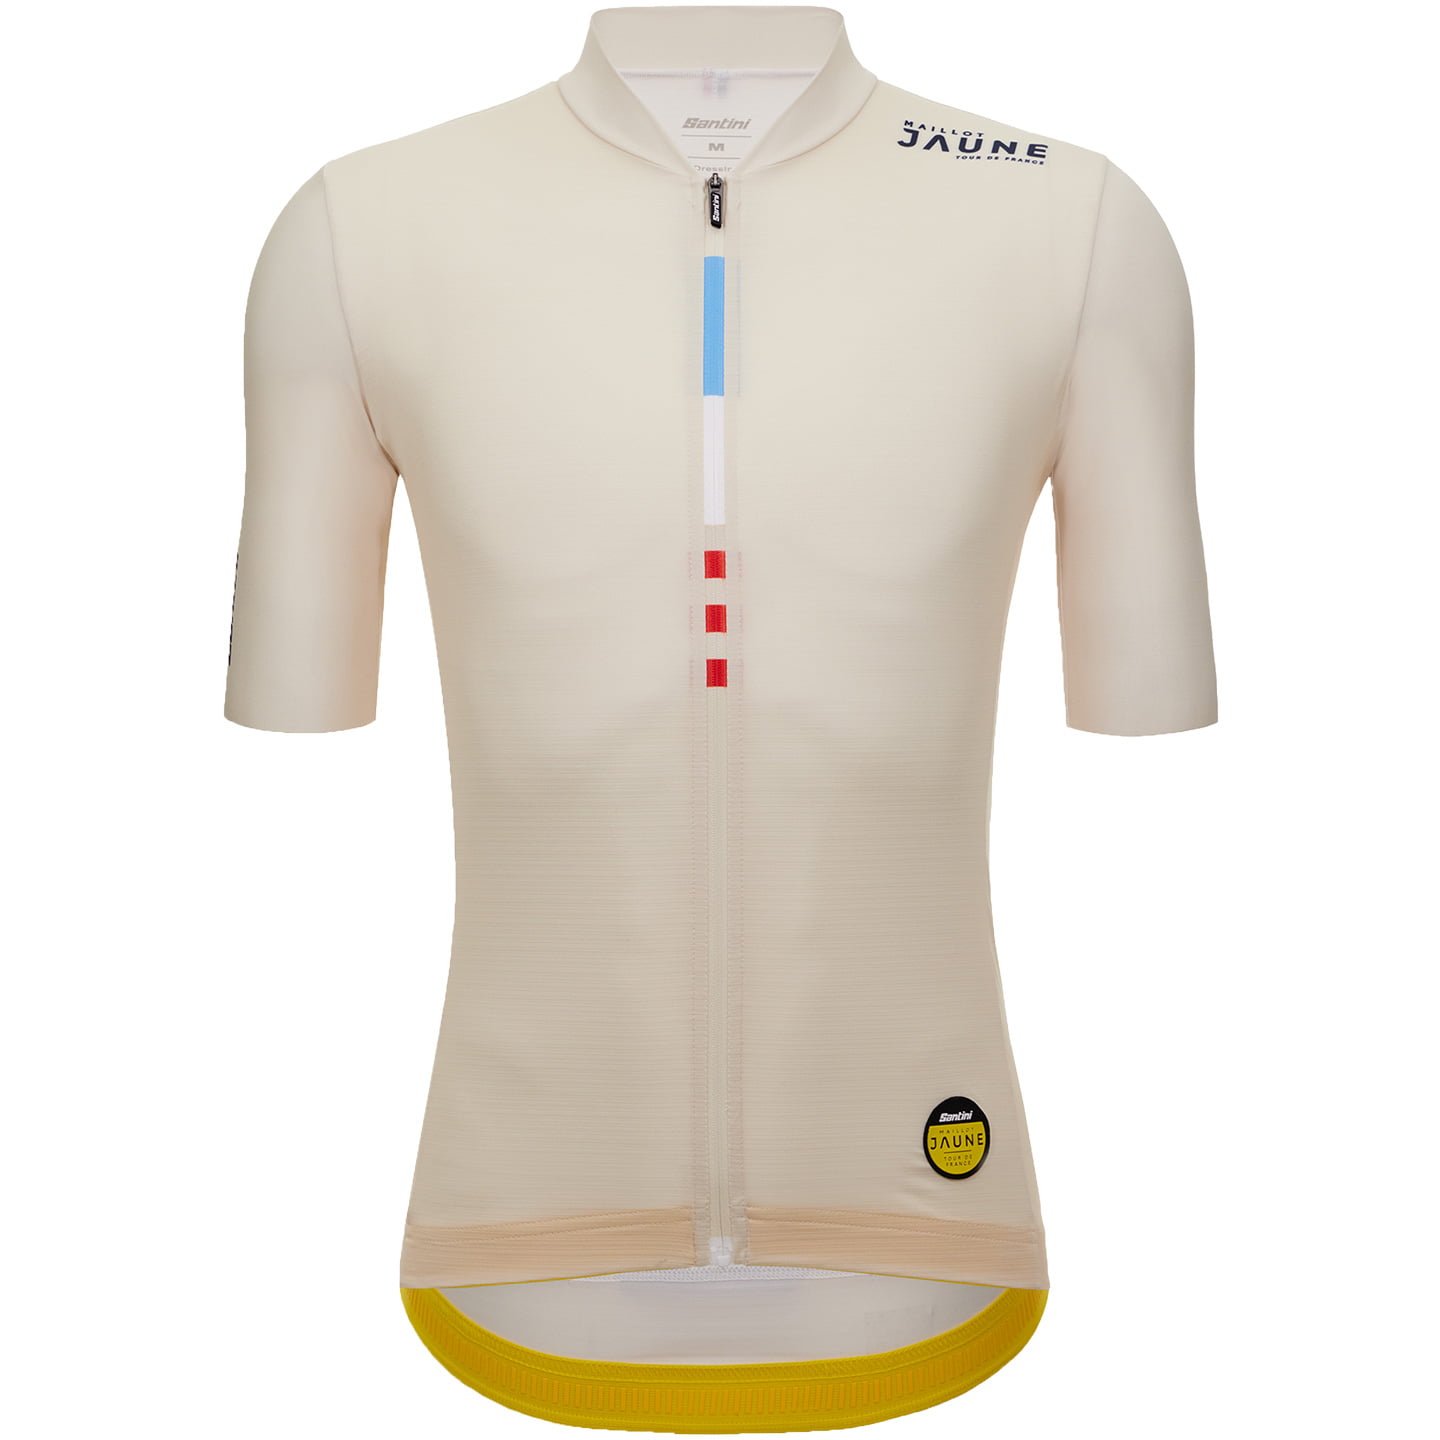 TOUR DE FRANCE Short Sleeve Le Maillot Jaune Mont Ventoux 2023 Jersey, for men, size M, Cycle jersey, Cycling clothing